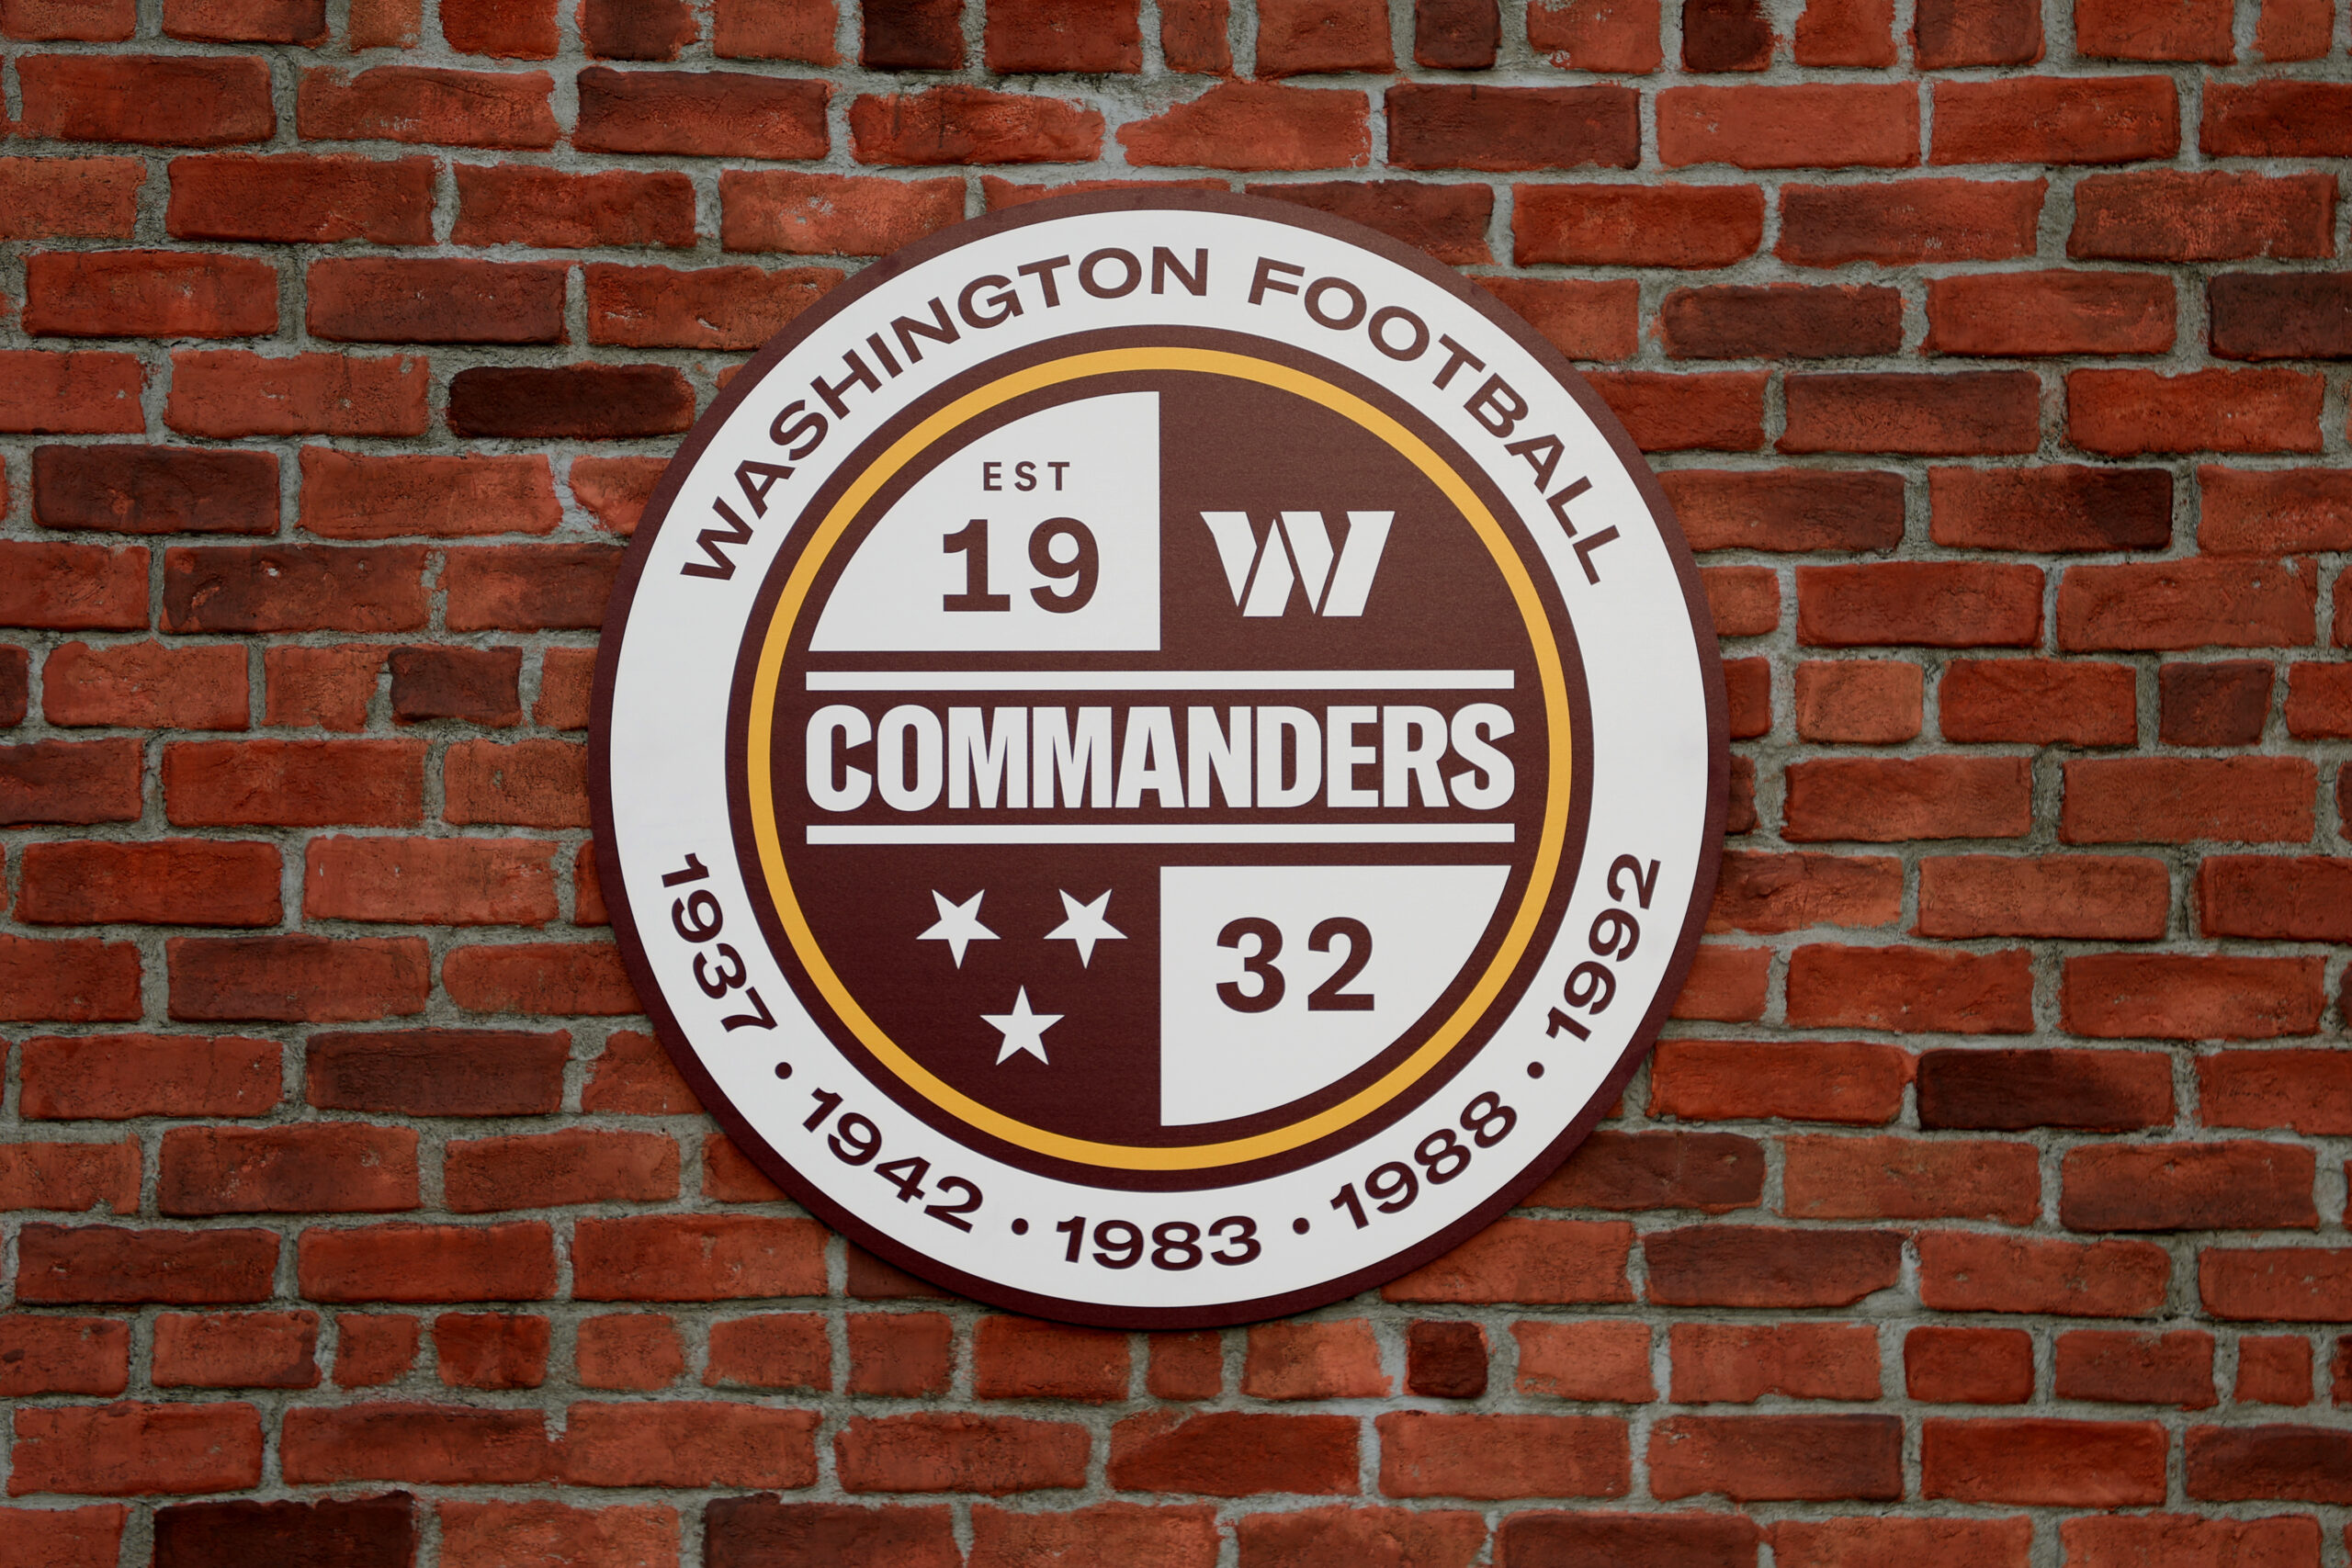 JUST IN: Washington Football Team Officially Renamed the Washington Commanders